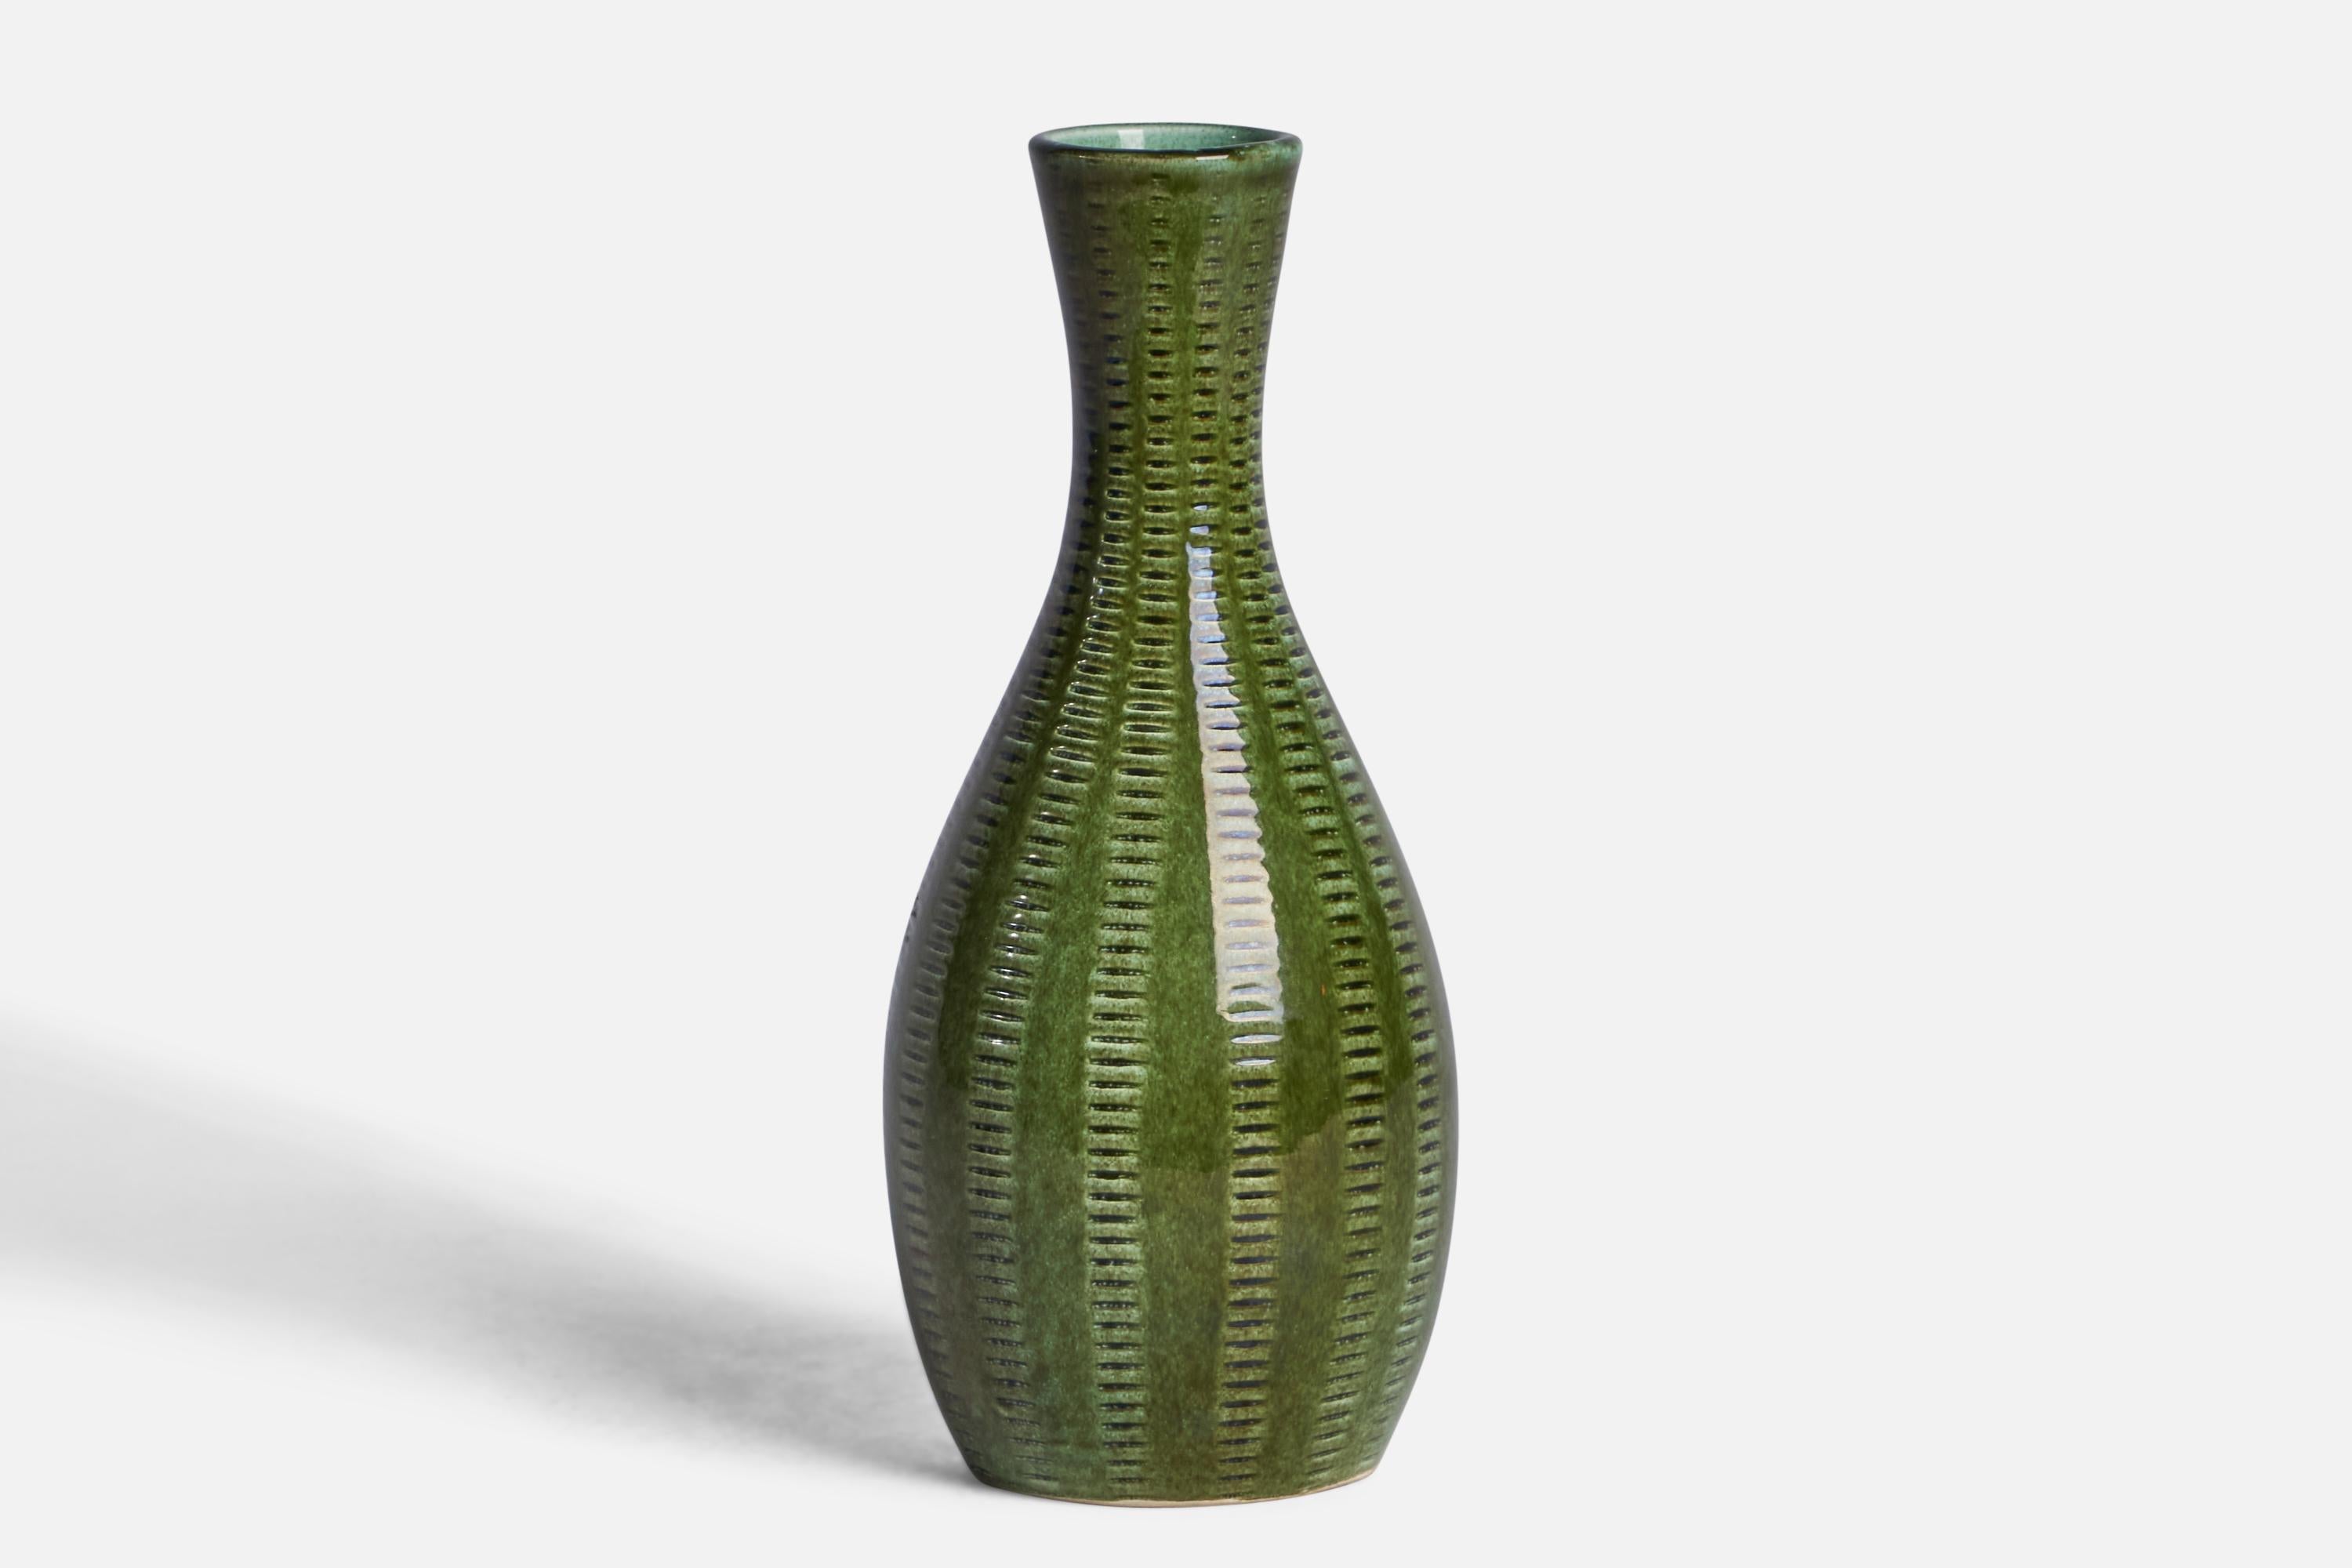 A green-glazed incised ceramic vase designed and produced by Klosterkeramik, Ystad, Sweden, c. 1960s.